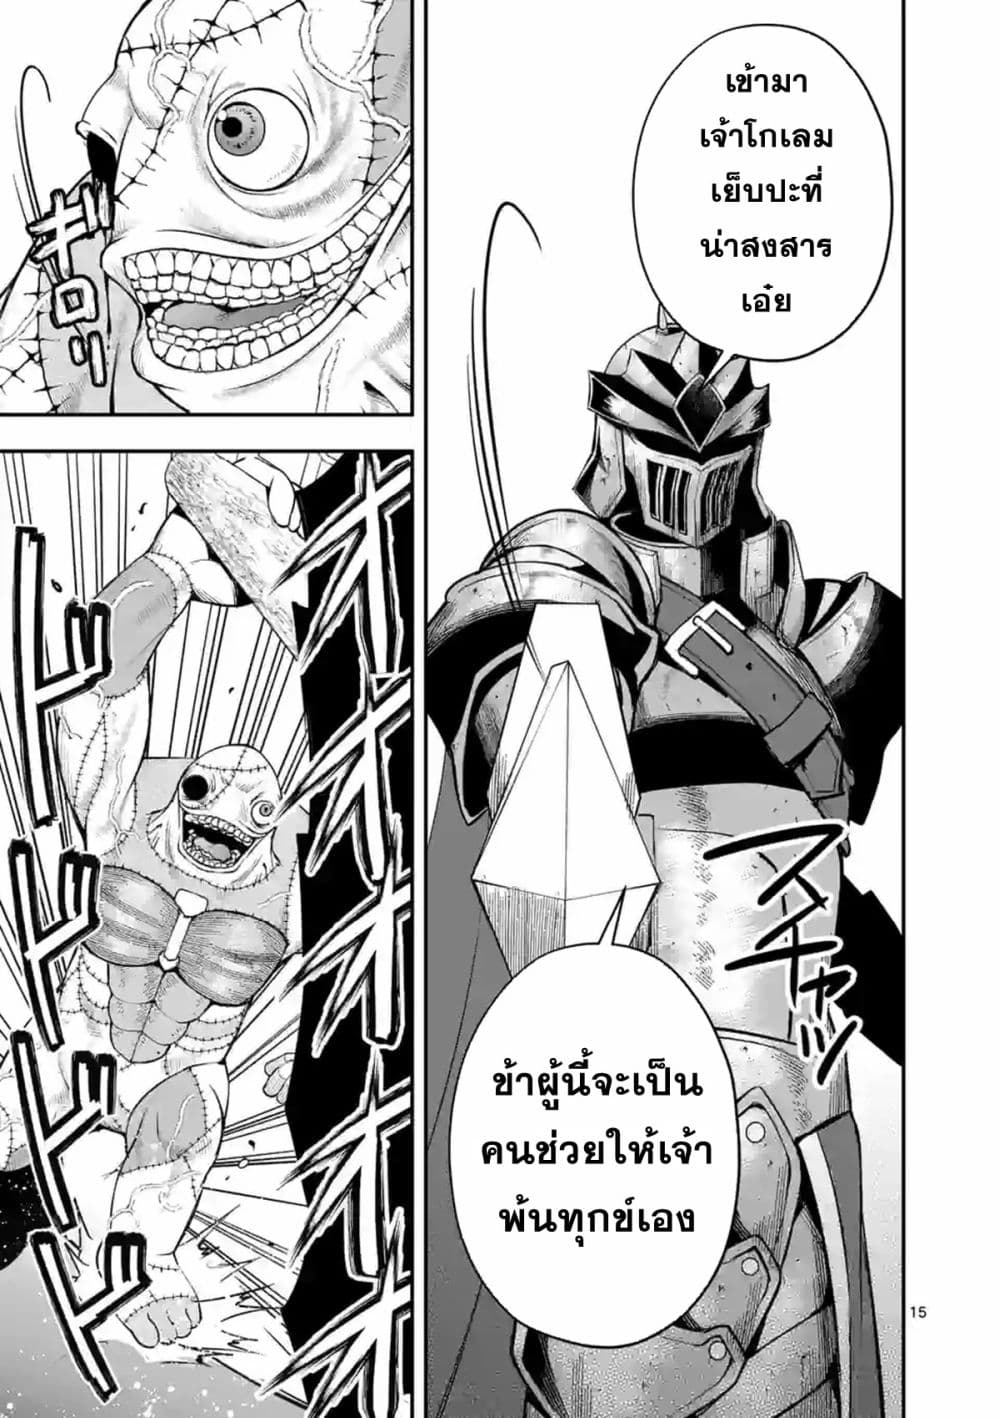 Moto Shogun no Undead Knight 13-13